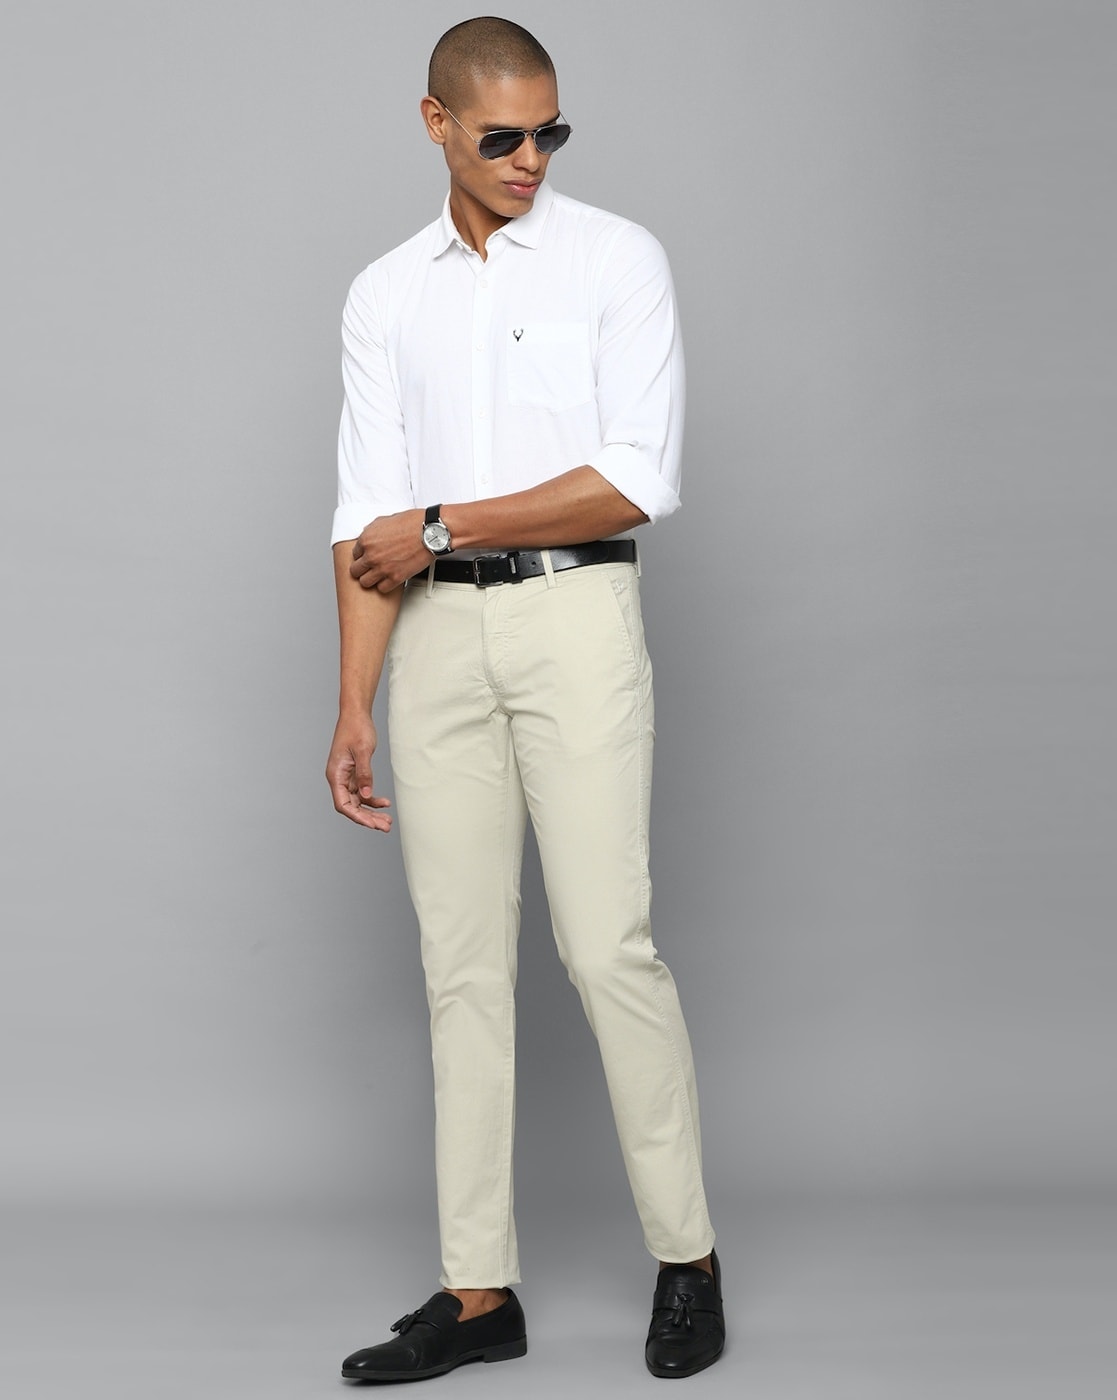 Relaxed Fit Corduroy Pants - Cream - Men | H&M US